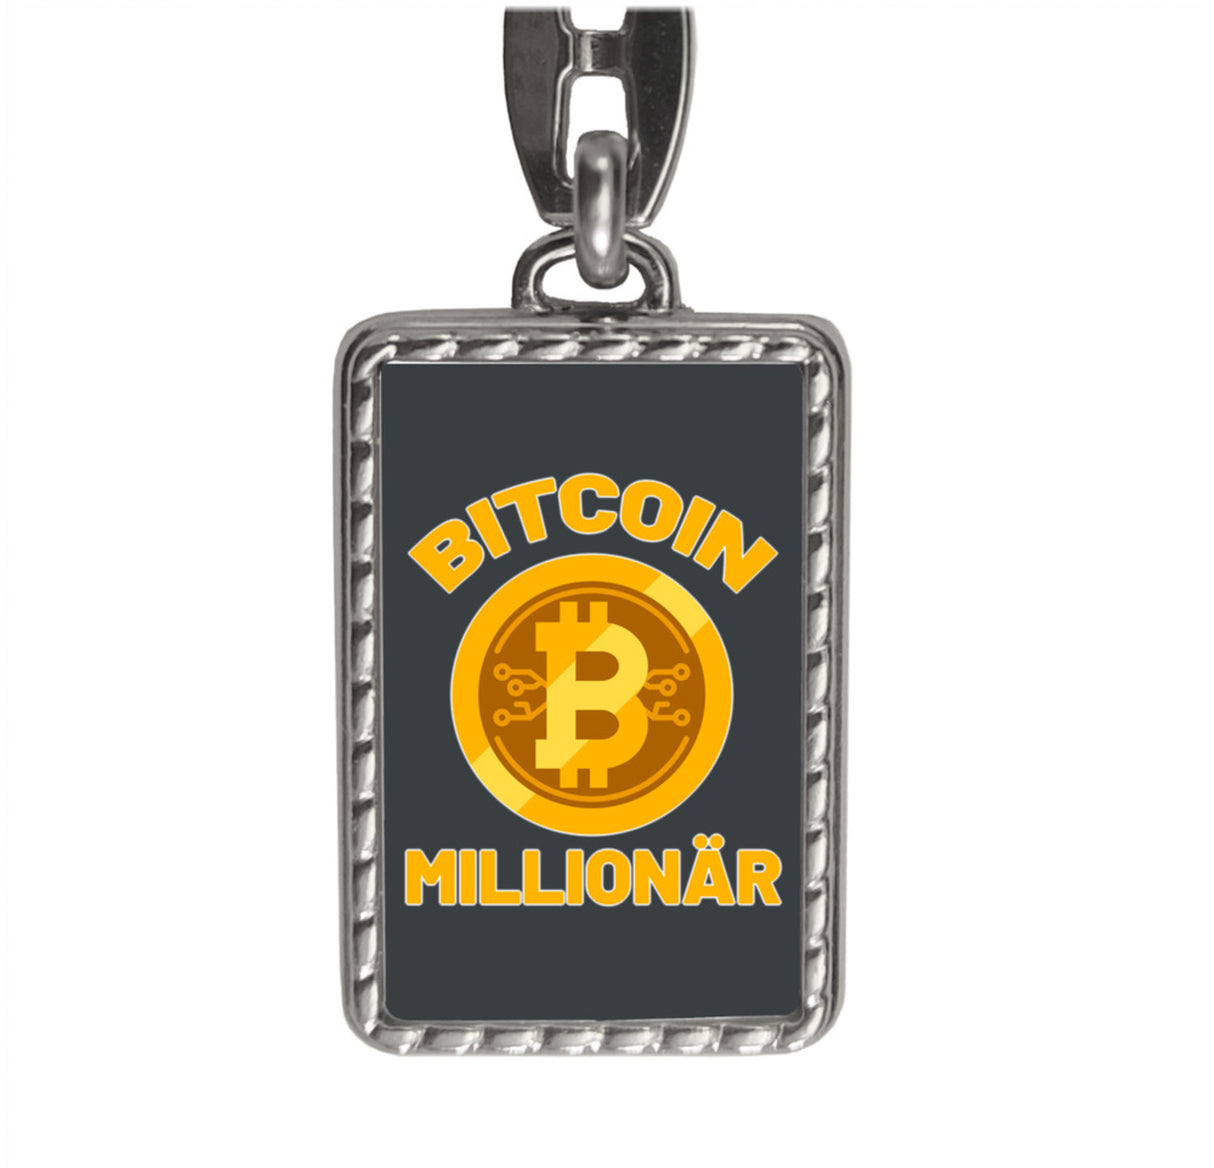 Bitcoin Millionär Kryptowährung Schlüsselanhänger